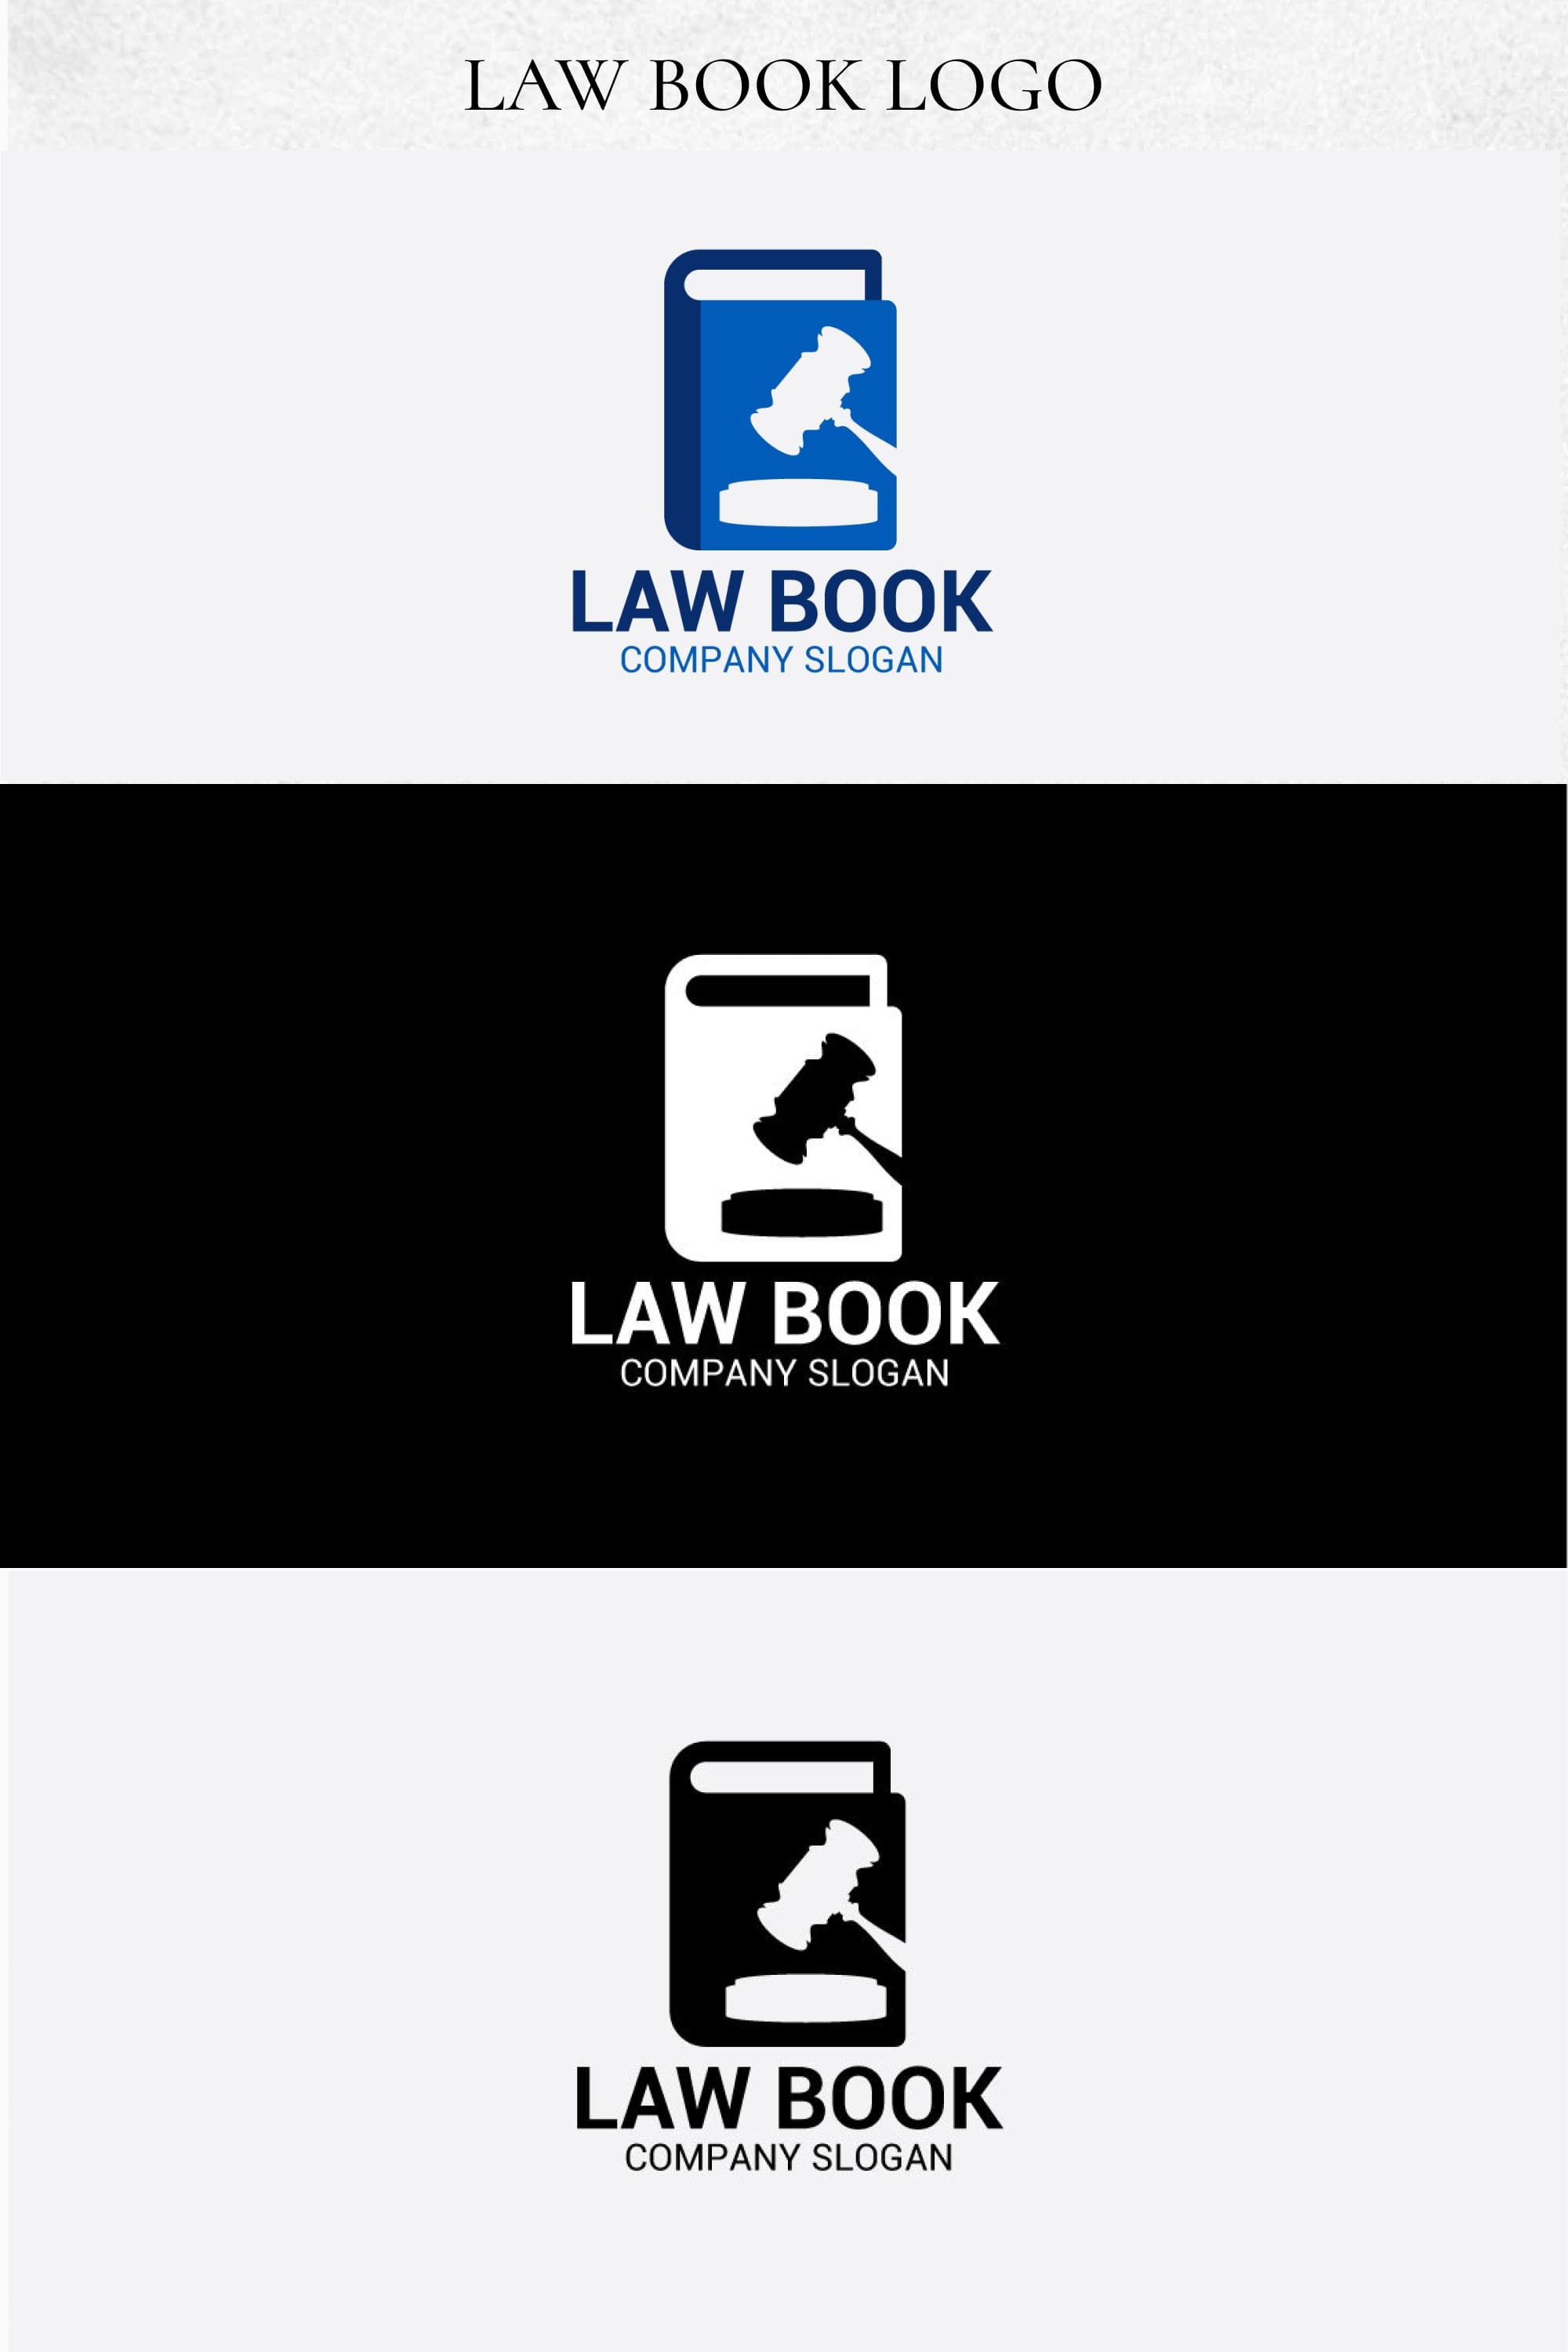 law book logo pinterest